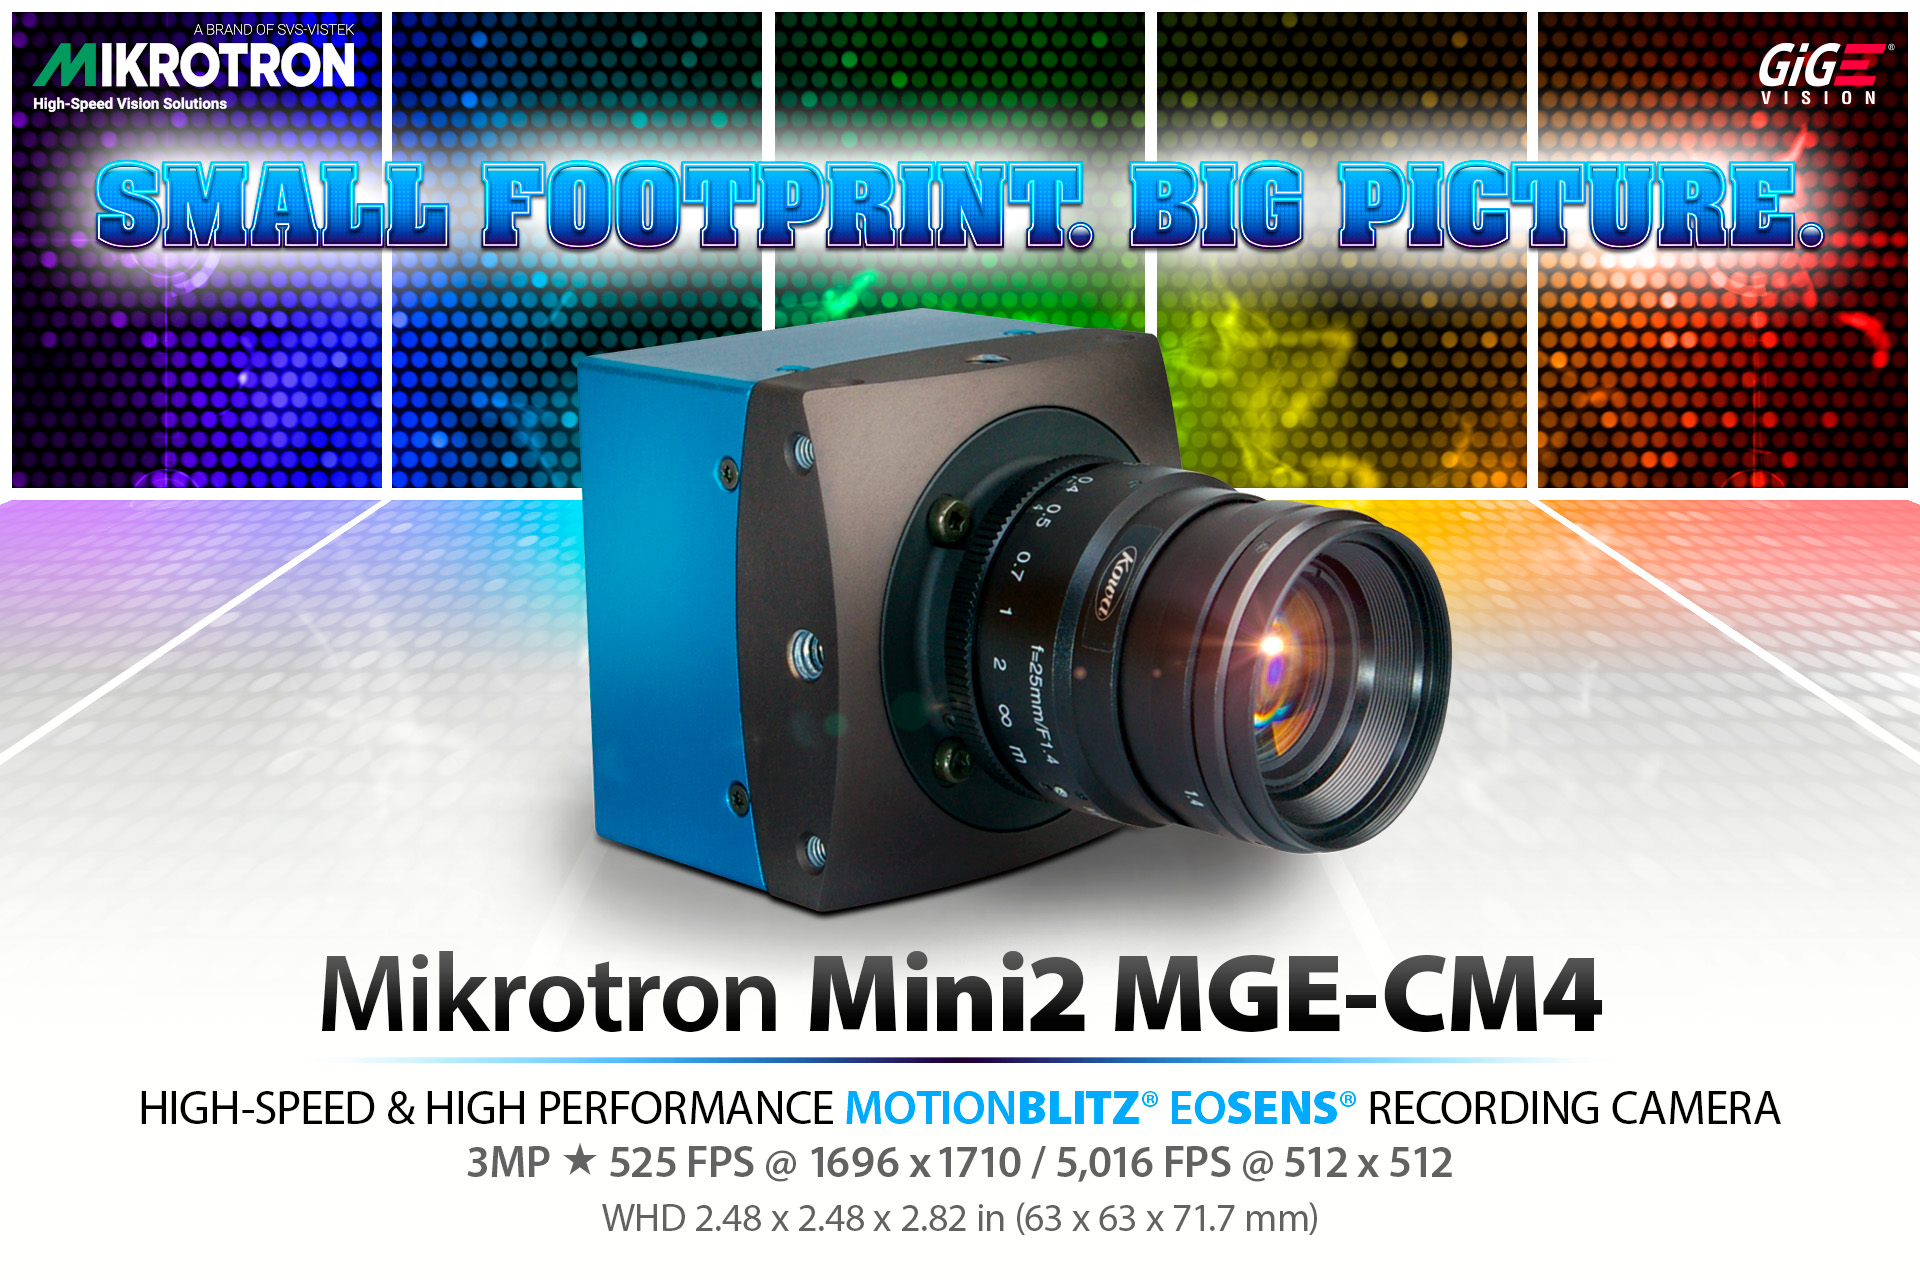 Hadland Imaging Mikrotron Mini2 MGE-CM4 MotionBLITZ® EoSENS® high-speed recording camera feature image.